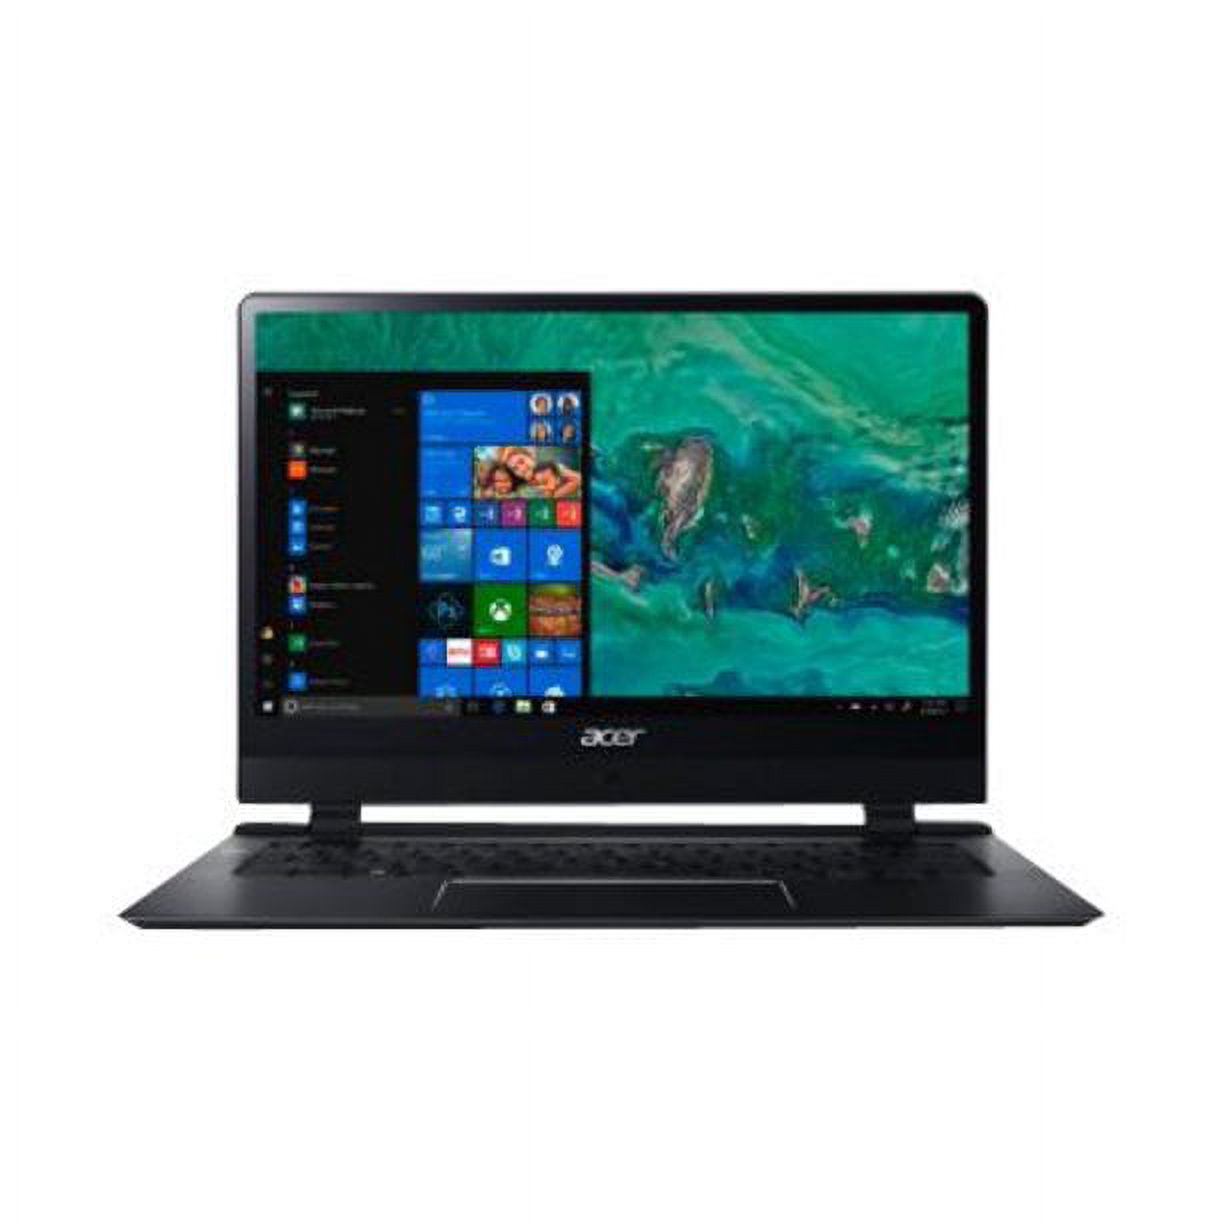 Acer Swift 7 SF714-51T-M9H0 - Core i7 7Y75 / 1.3 GHz - Win 10 Home 64-bit - 8 GB RAM - 256 GB SSD - 14" touchscreen 1920 x 1080 (Full HD) - HD Graphics 615 - Wi-Fi 5, Bluetooth - 4G - black - kbd: US - image 1 of 2